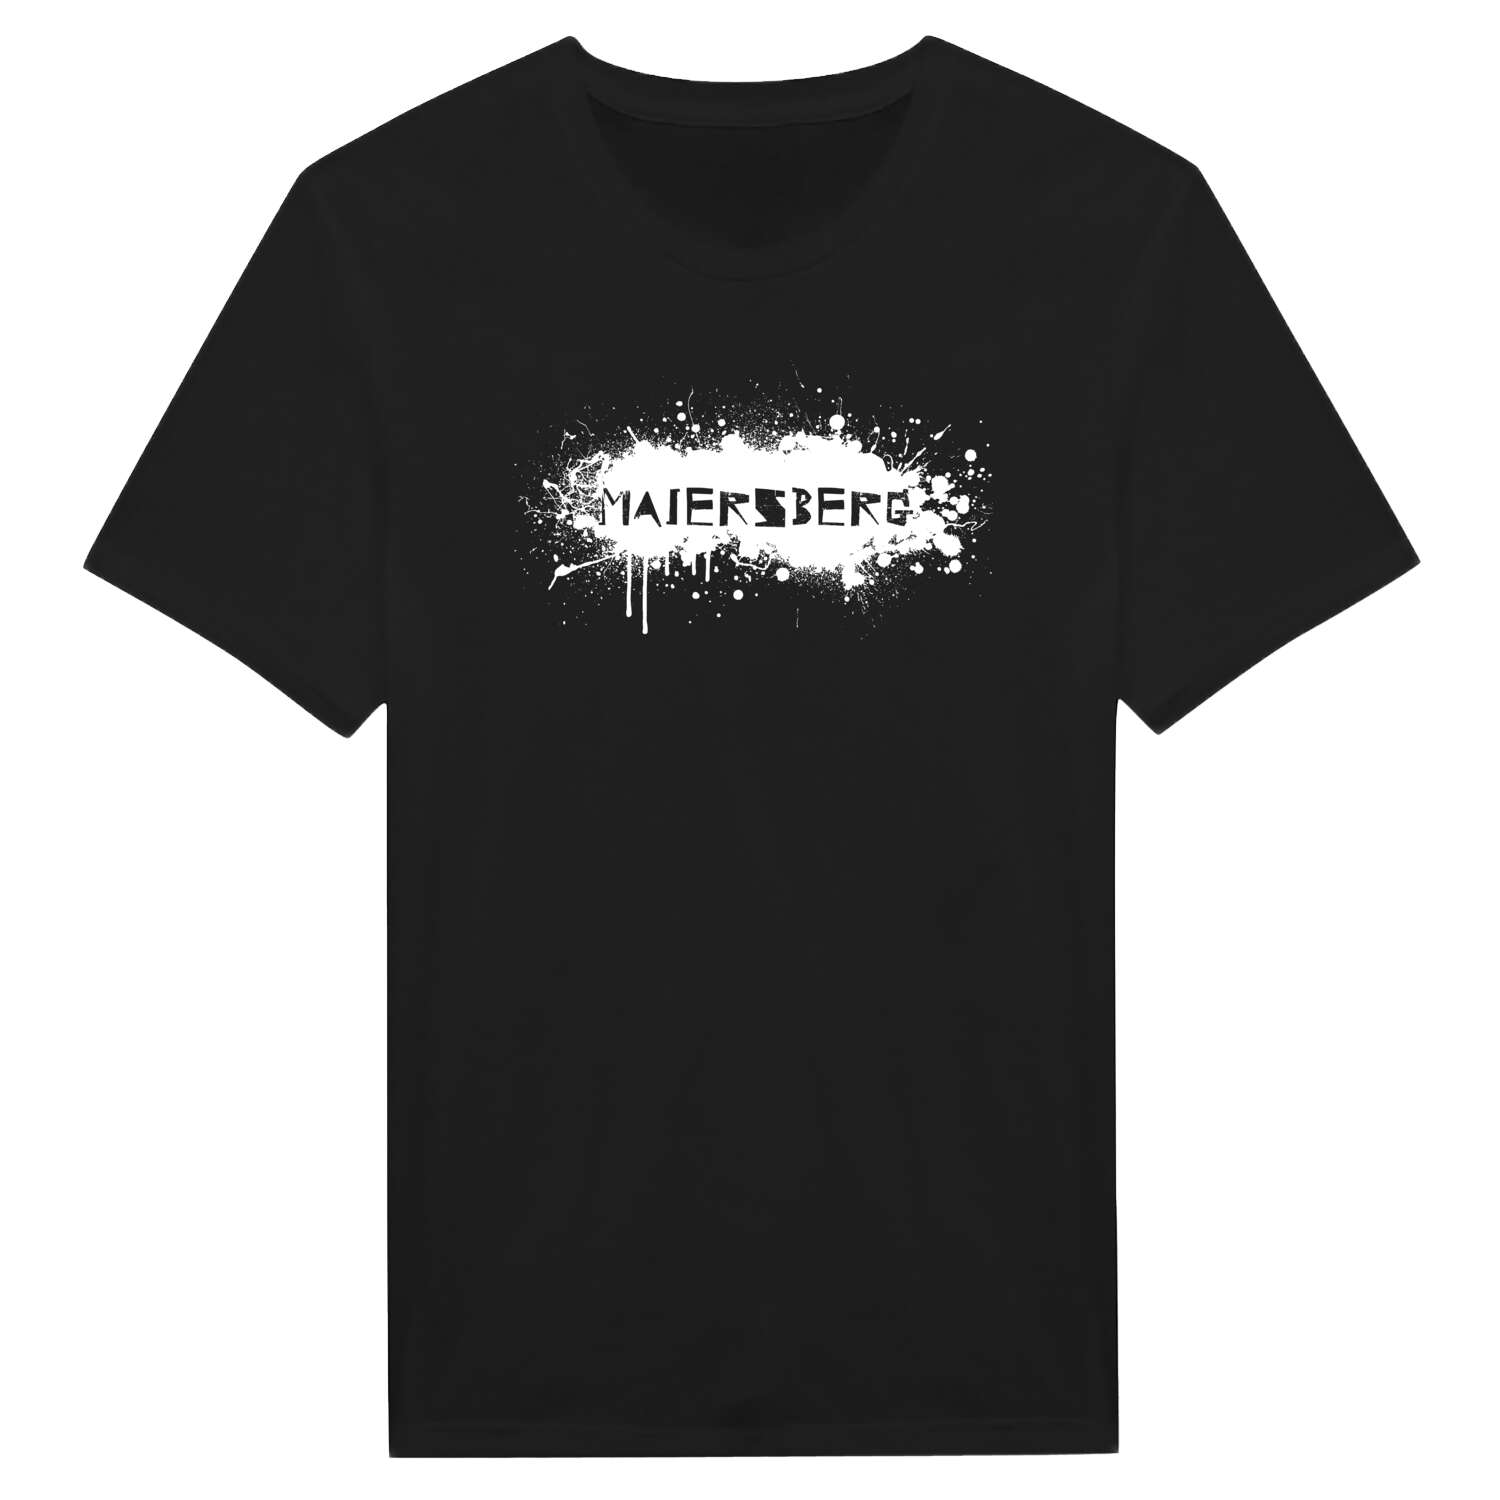 Maiersberg T-Shirt »Paint Splash Punk«